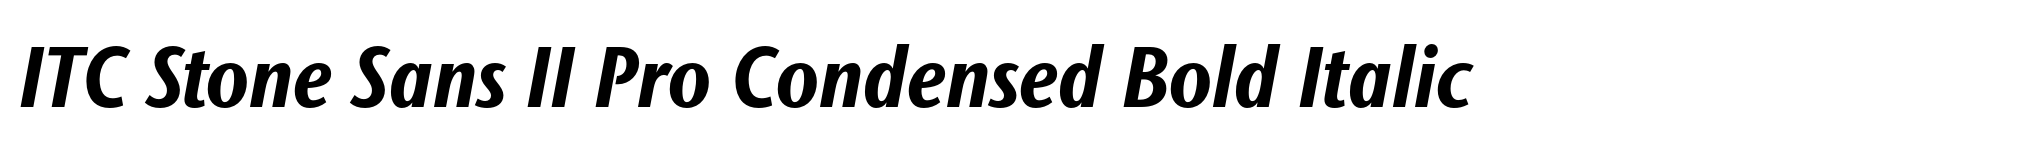 ITC Stone Sans II Pro Condensed Bold Italic image